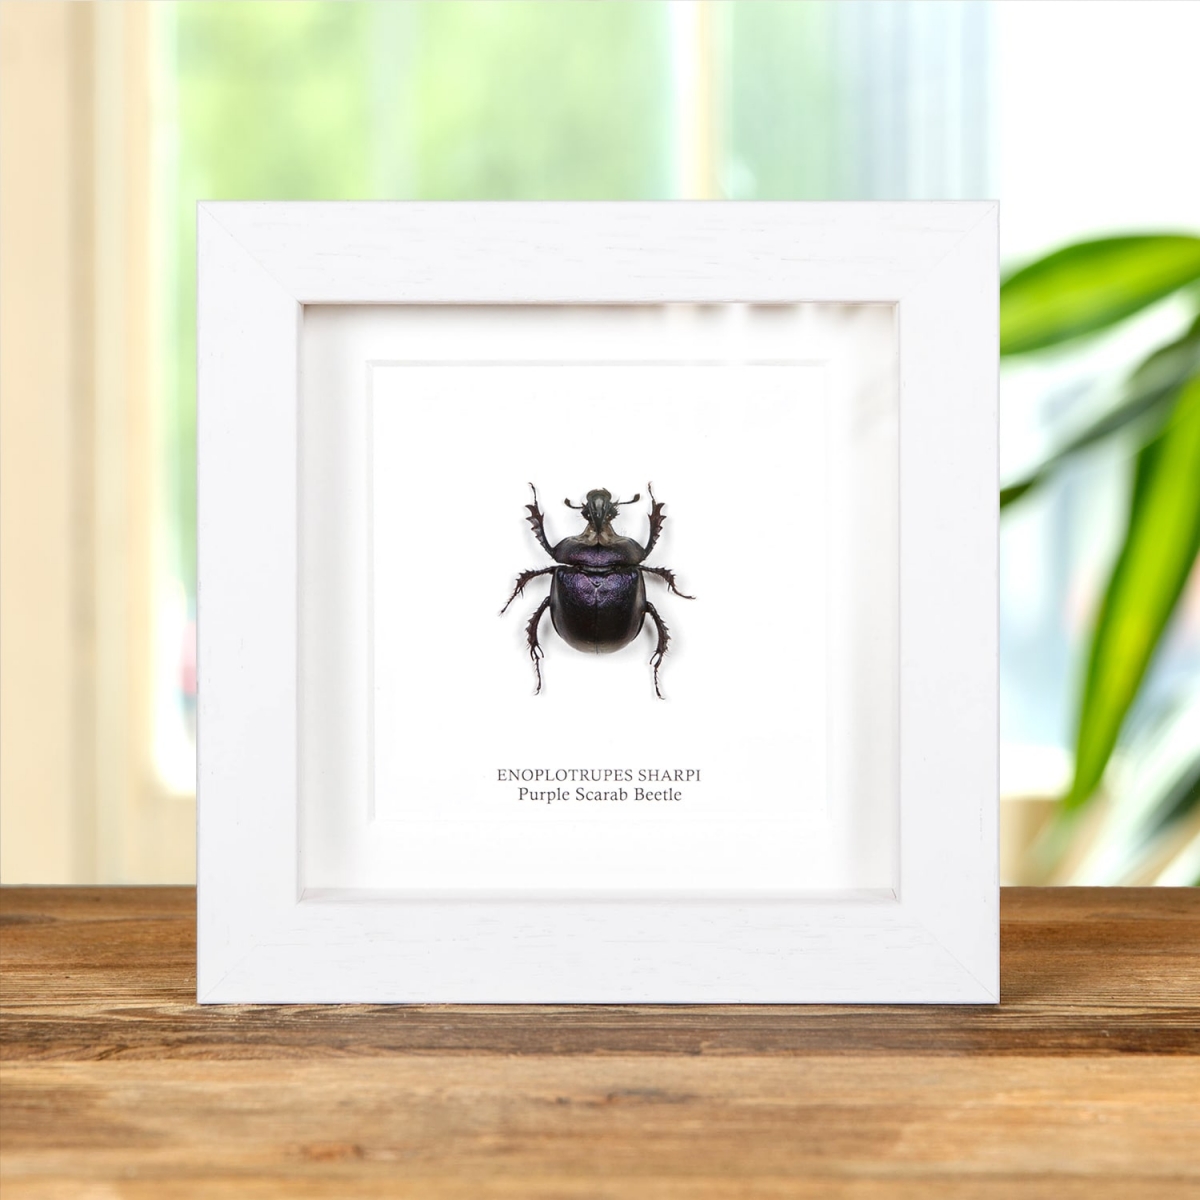 Purple Scarab Beetle in Box Frame (Enoplotrupes sharpi)